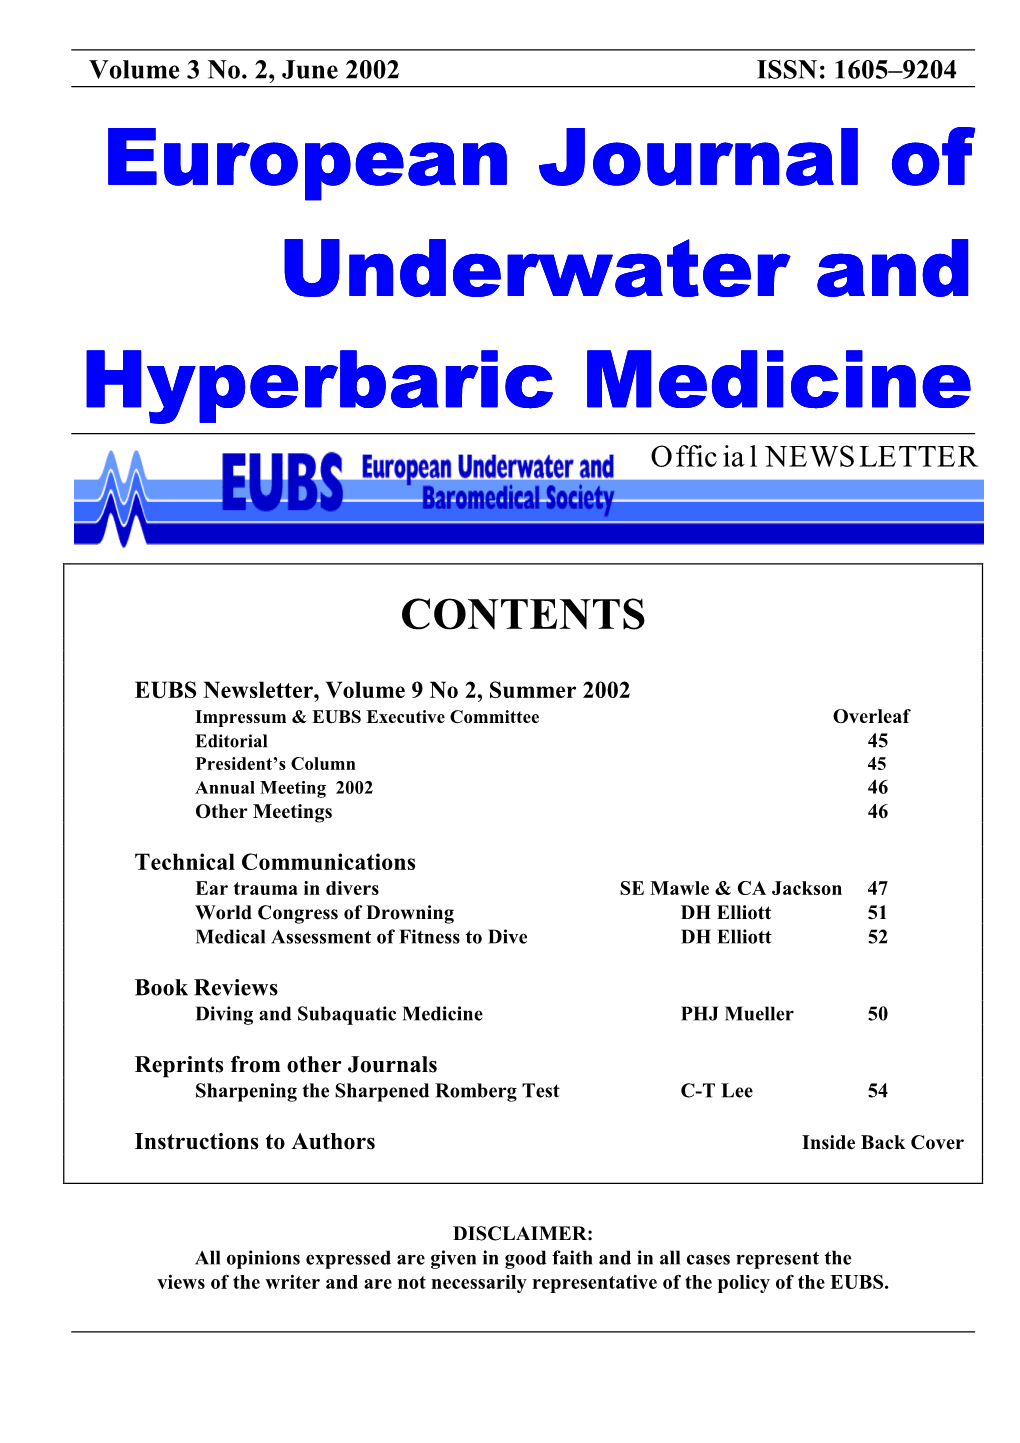 European Journal of Underwater and Hyperbaric Medicine Official NEWSLETTER